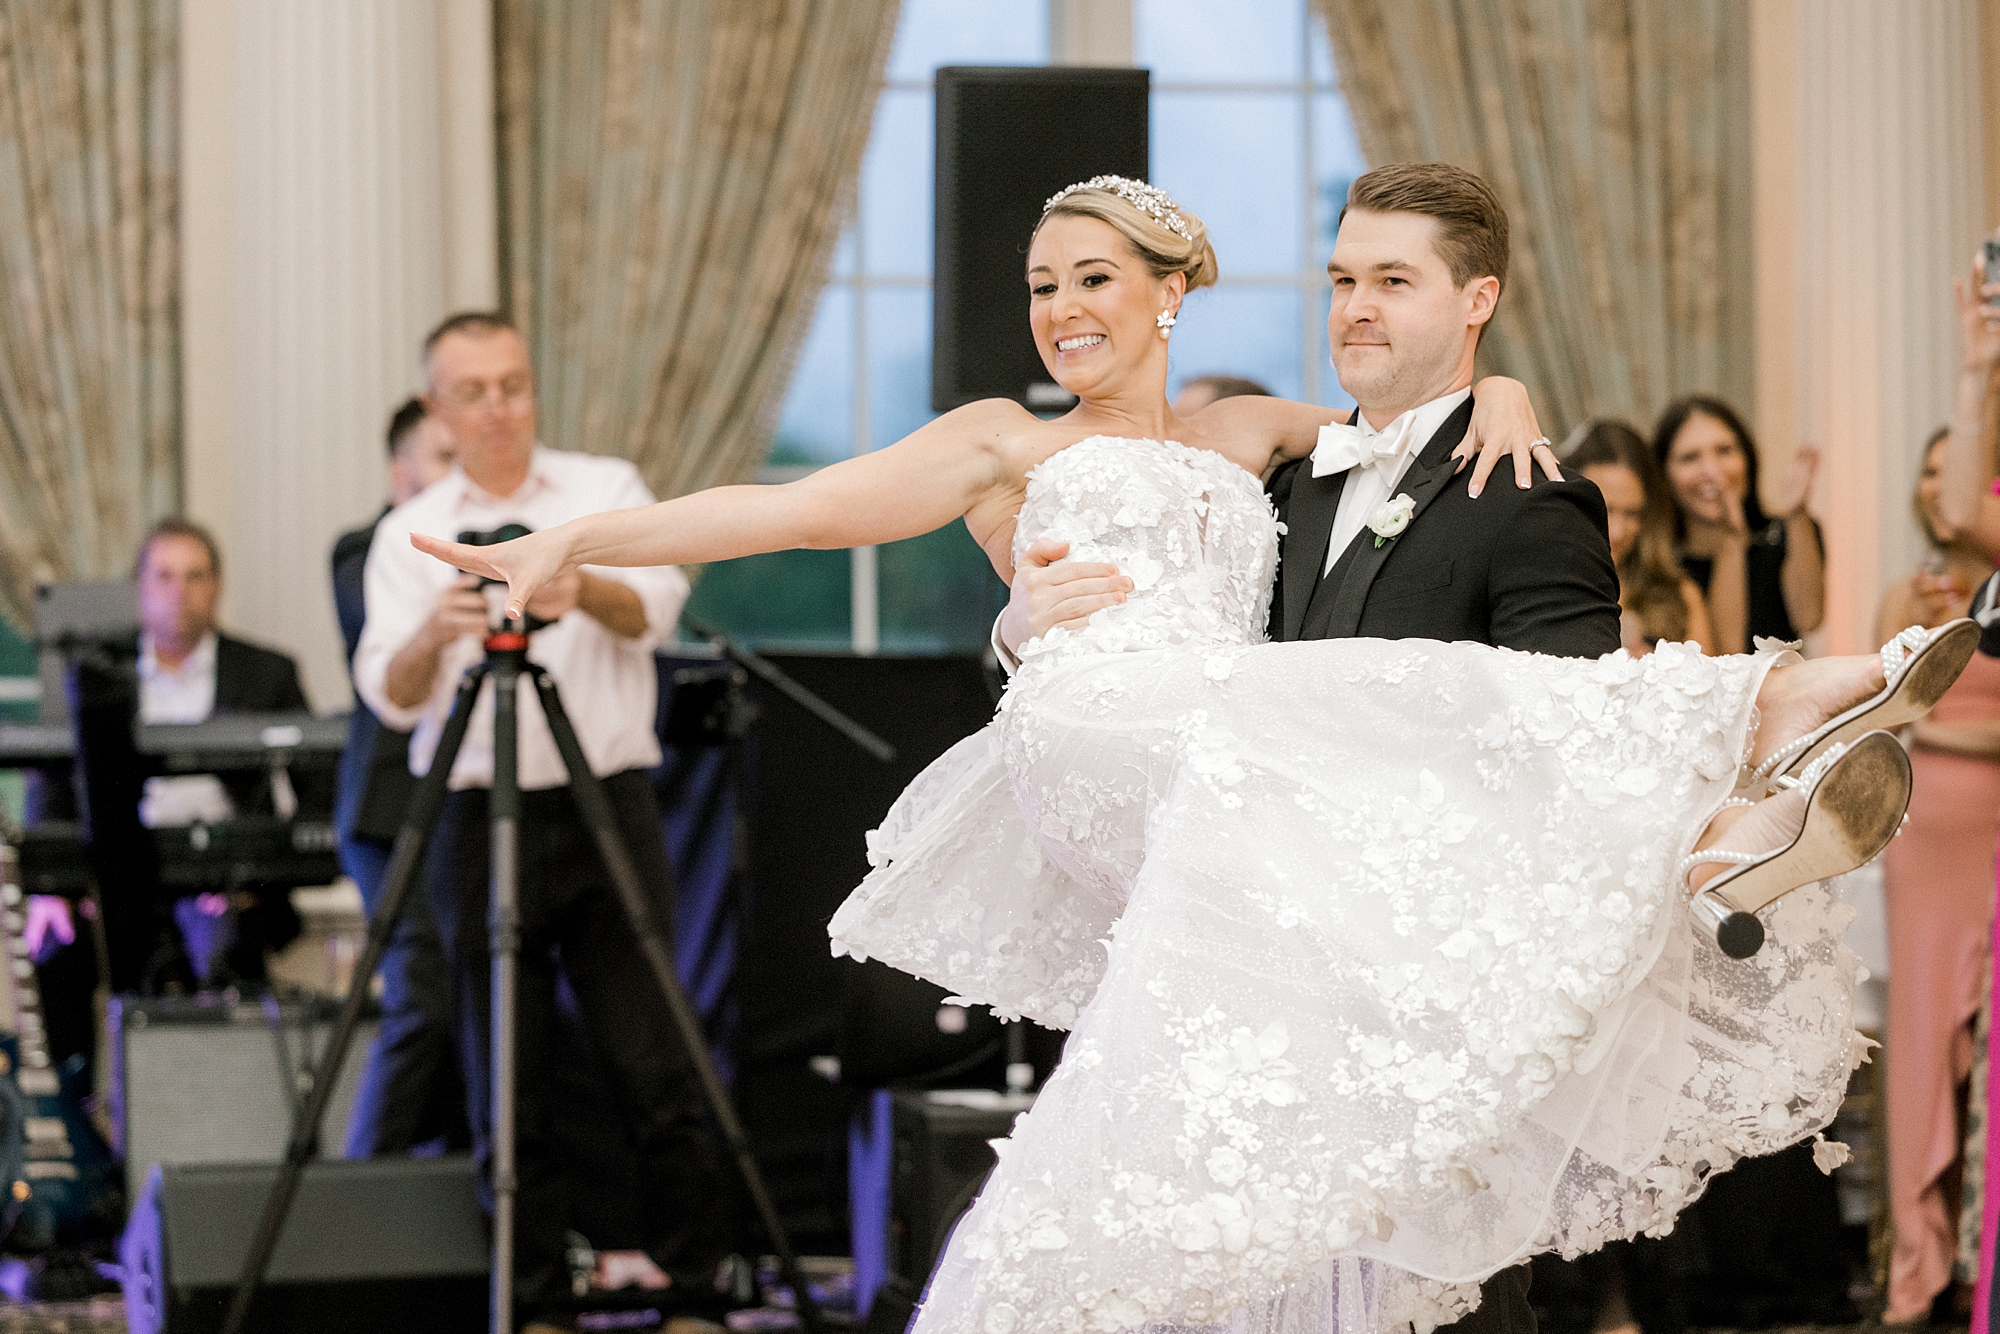 groom picks up bride and twirls her on dance floor at Allentown NJ wedding reception